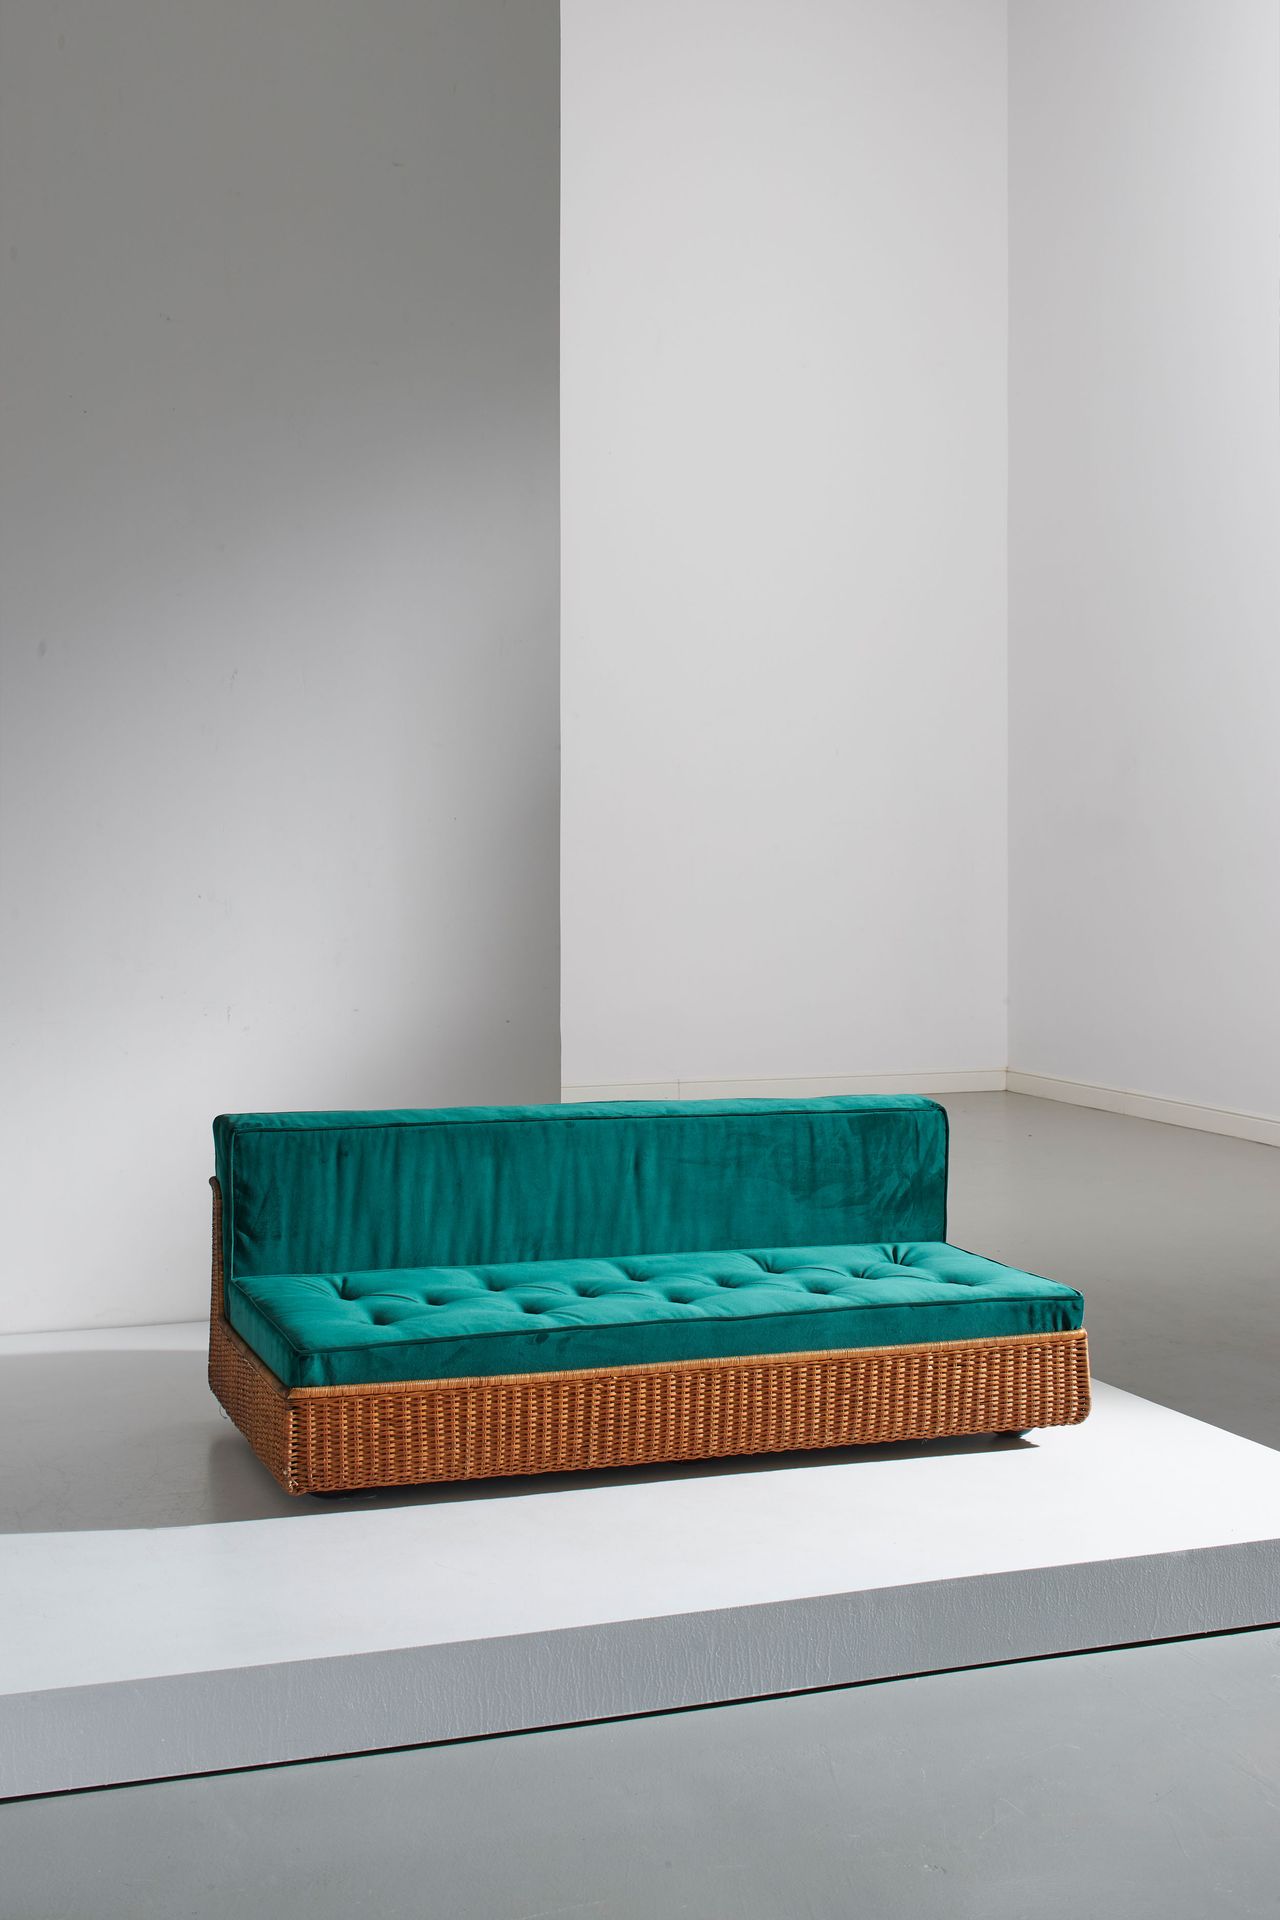 TITO AGNOLI (ATTRIB. A) 沙发。橡胶，搪瓷铁杆，编织的几内亚藤条，软垫布。意大利1960年代。
cm 60x162x82
A SETTEE&hellip;